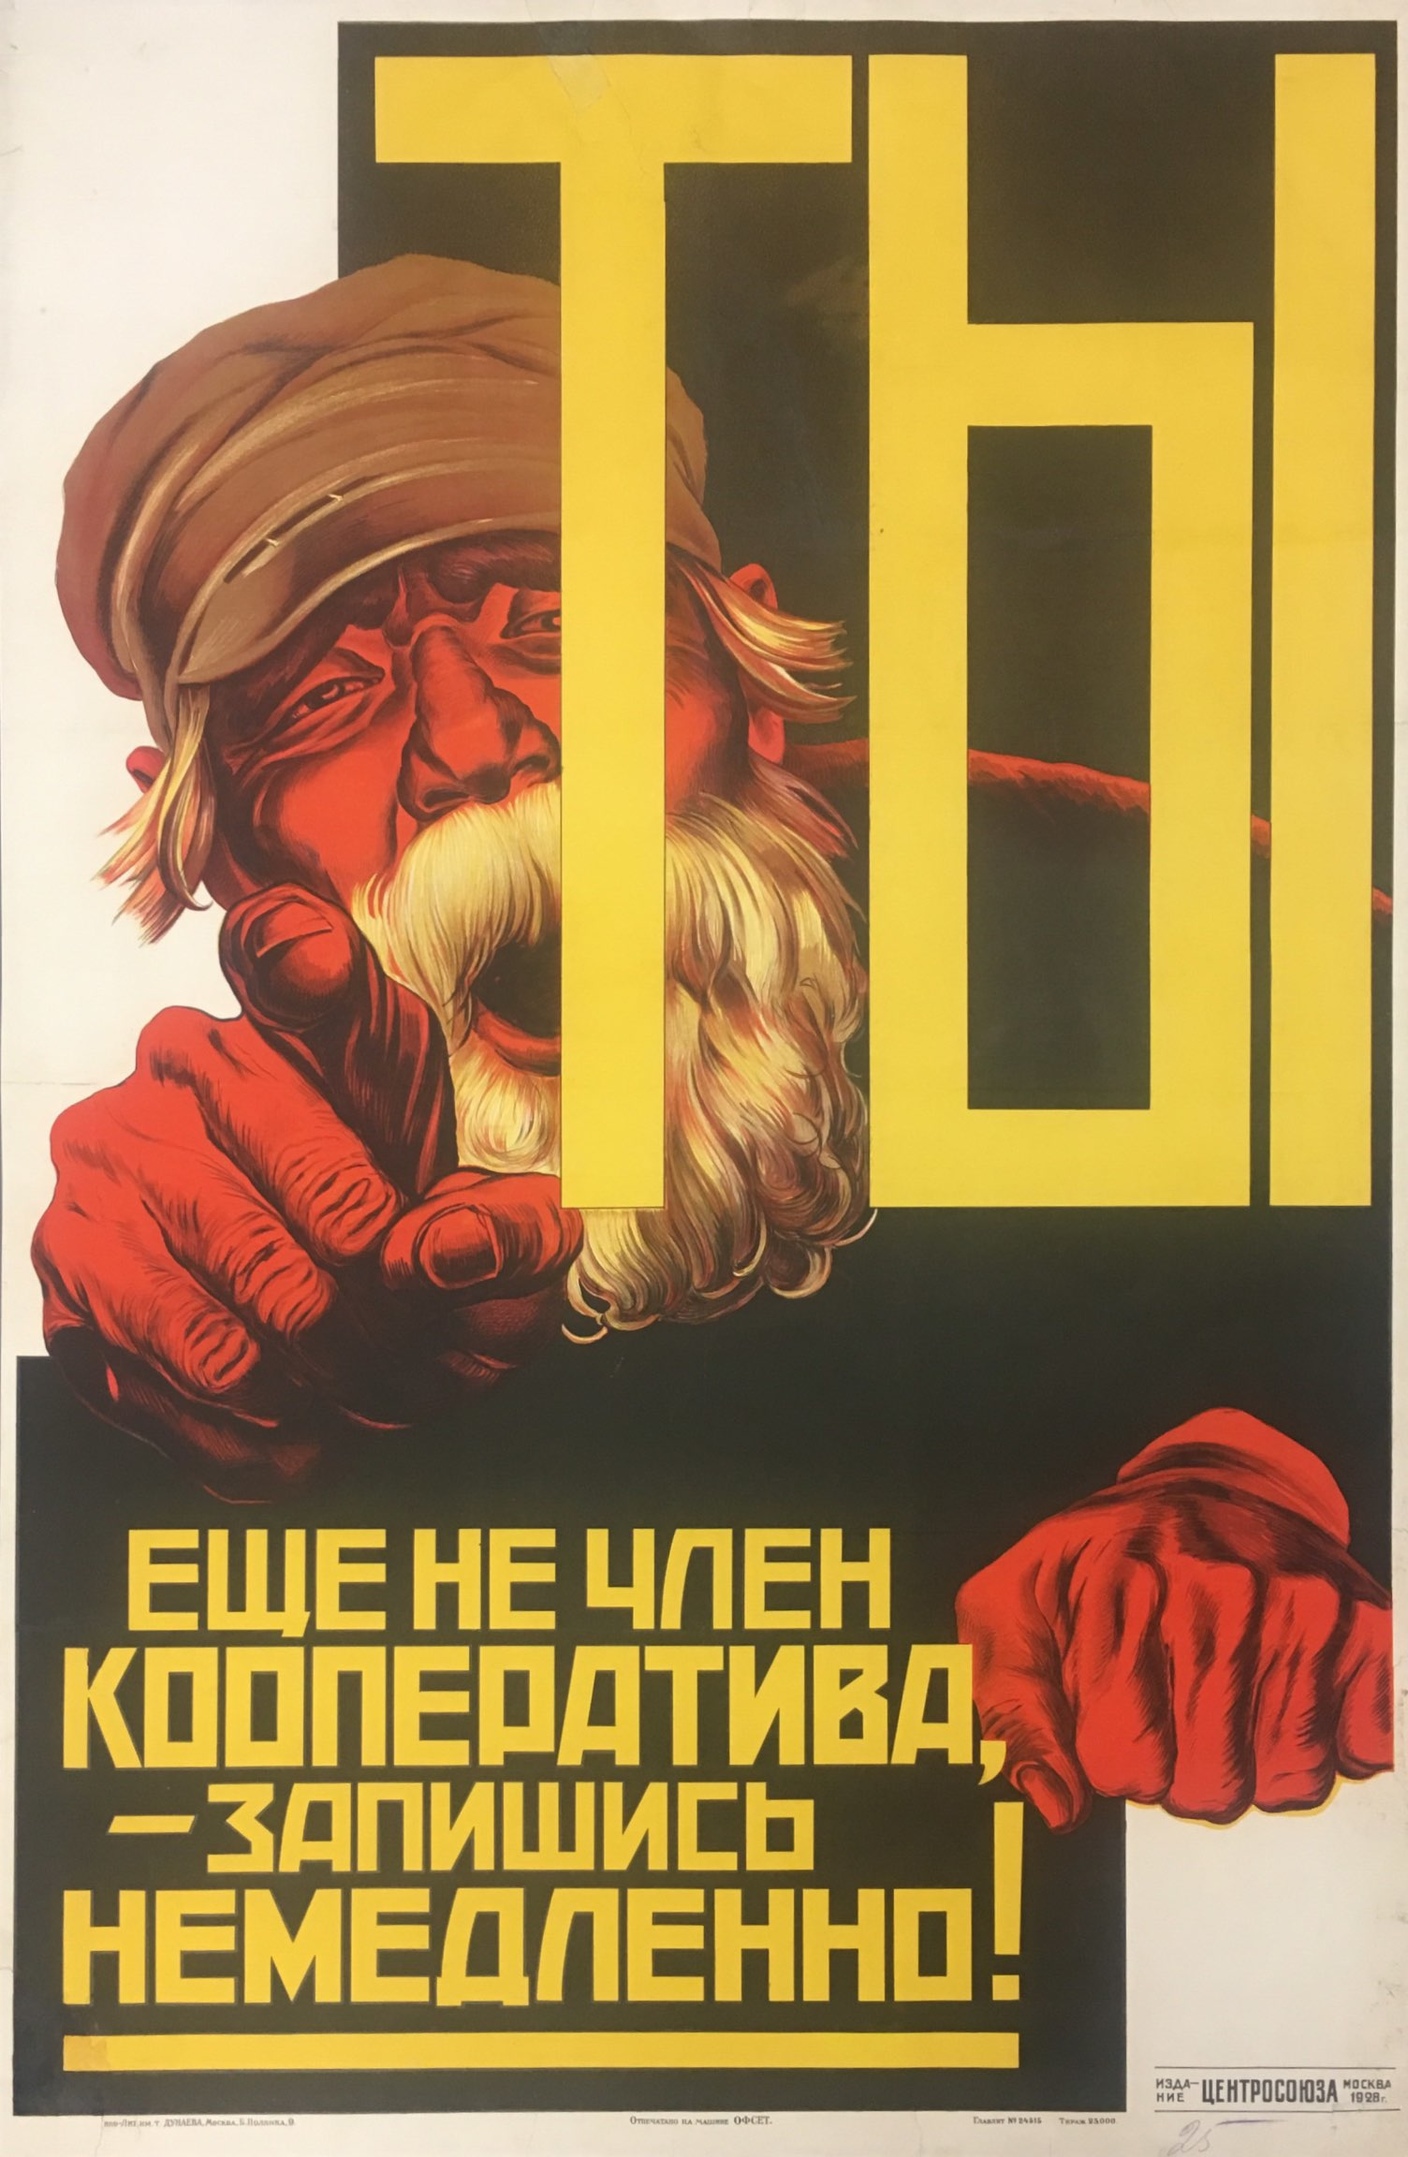 URSS 1928 Si tu n'es pas encore membre de la cooperative, inscris-toi